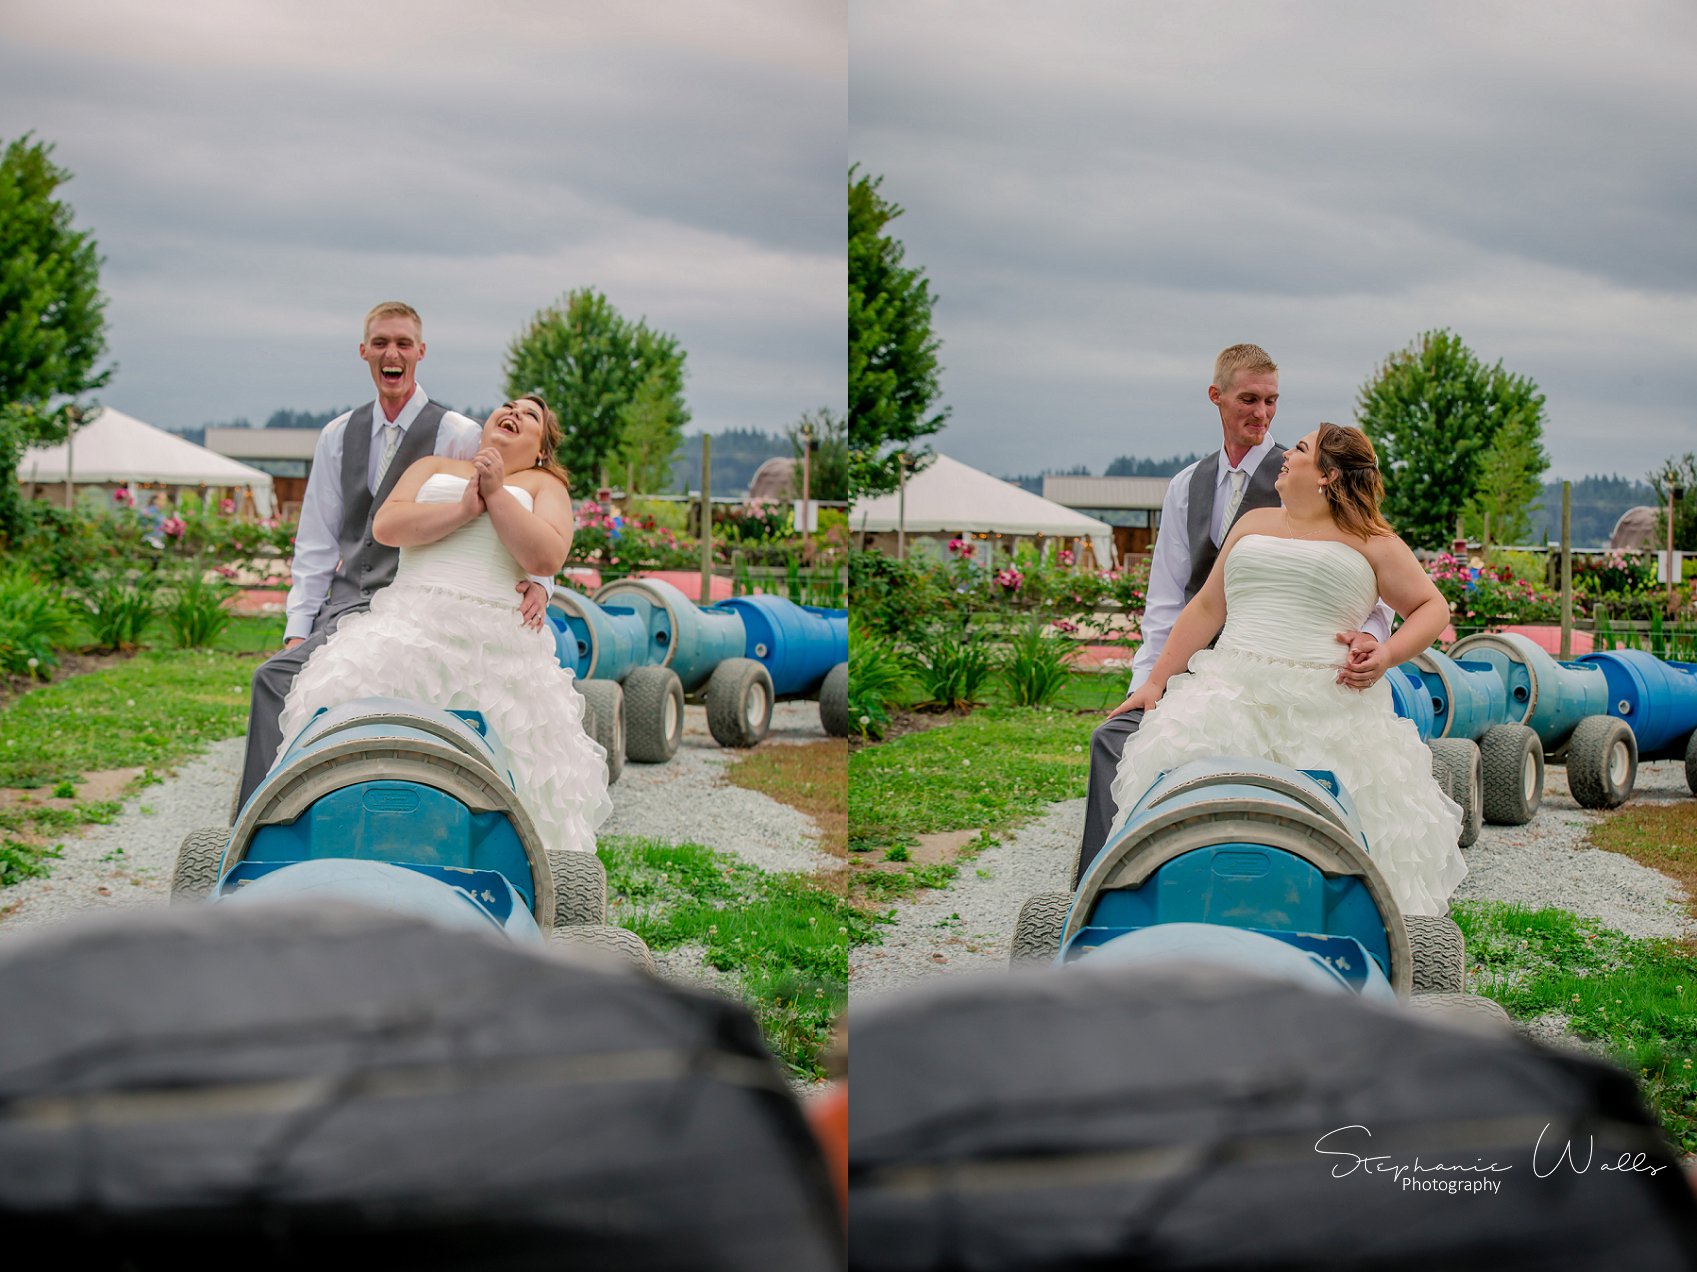 Kimble Wedding 067 2 Marlena & Allans | Snohomish Red Barn Events (Stocker Farms) | Snohomish, Wa Wedding Photographer